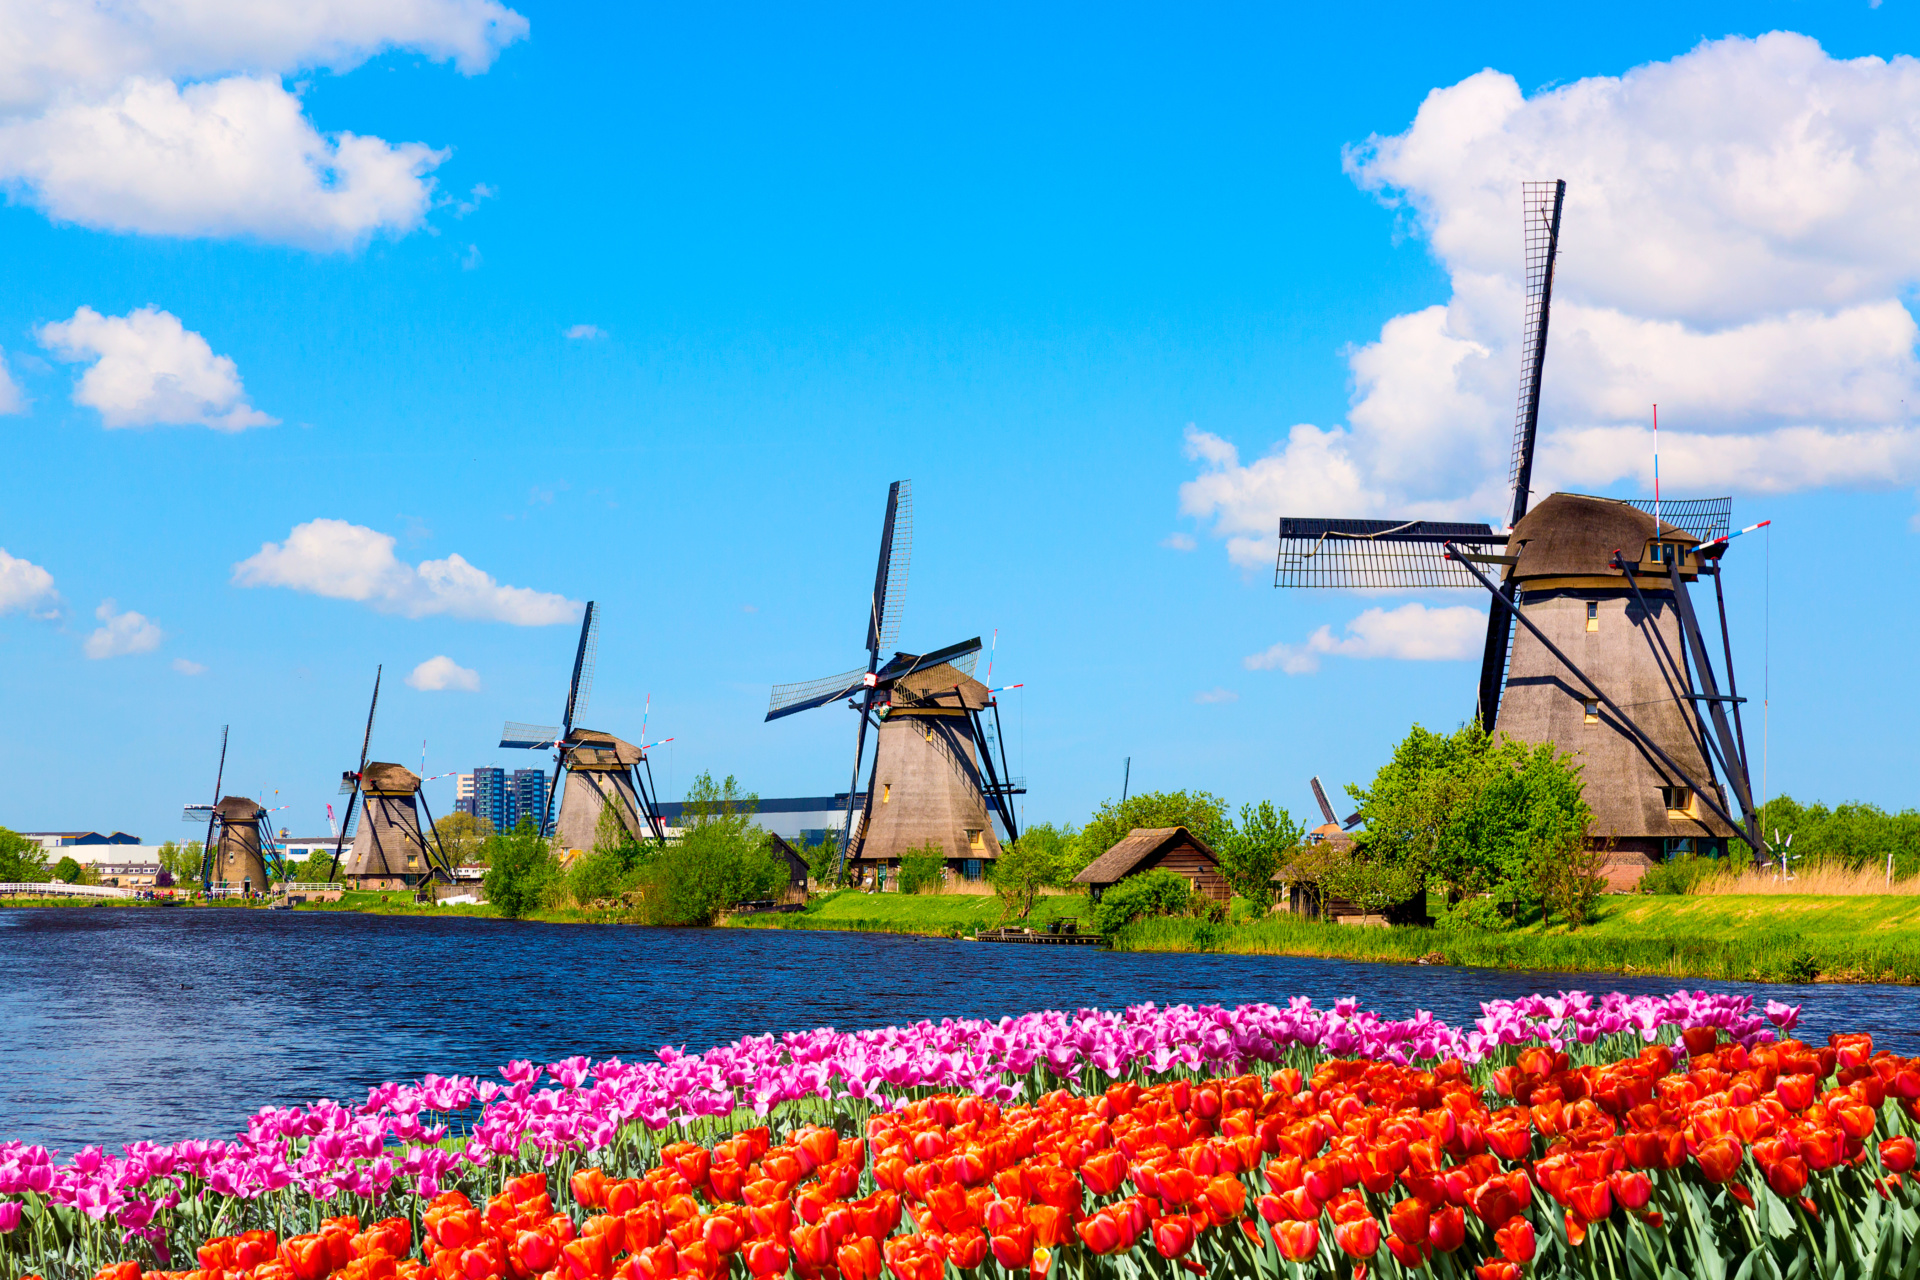 nizozemska, mlini na veter ob vodi, jasno nebo, v ospredju tulipani